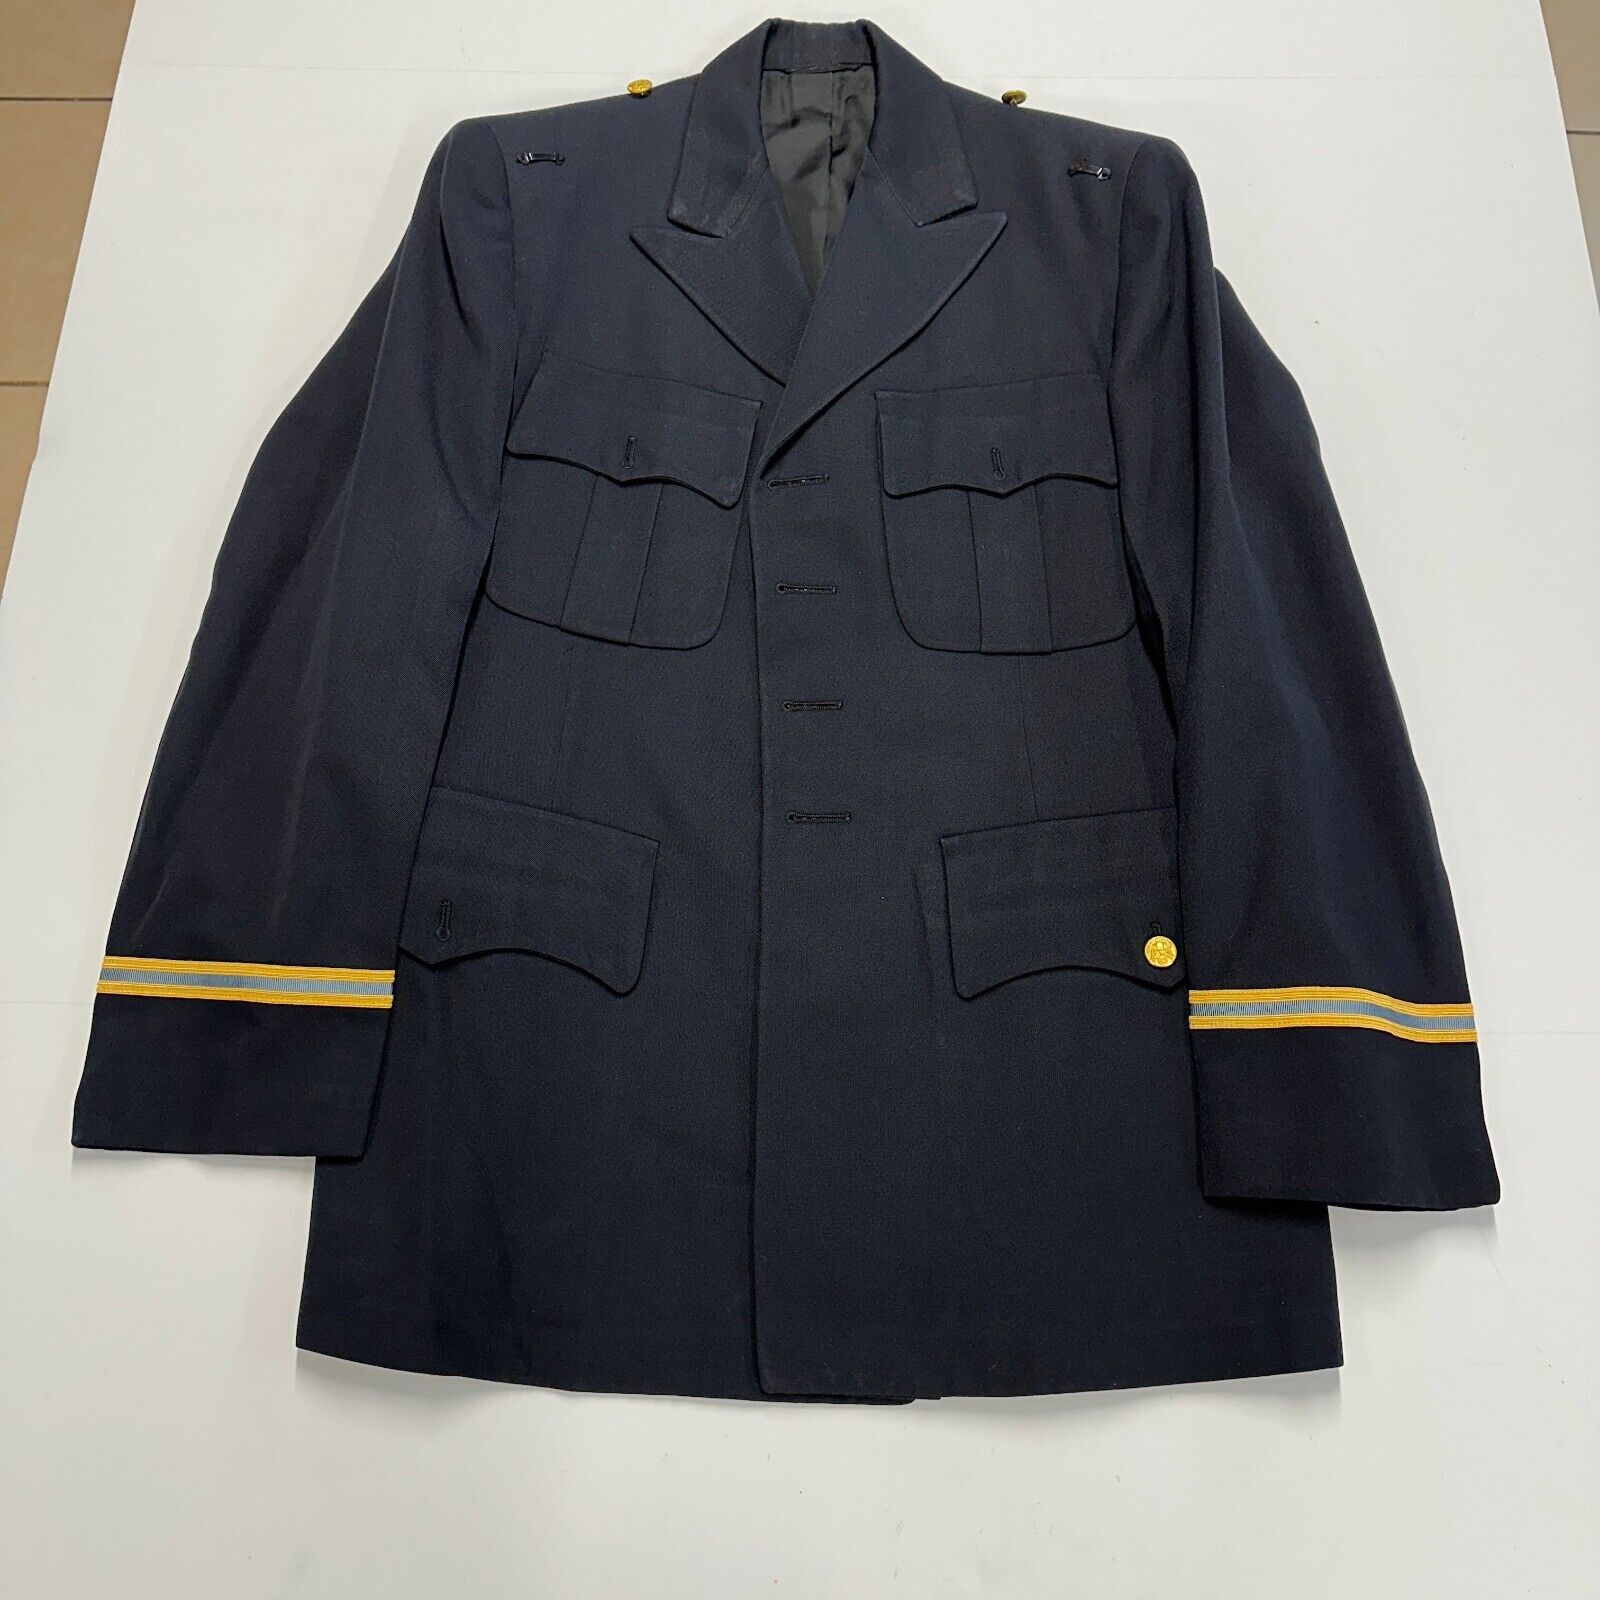 Vintage U.S. Army Engineers Officer\'s Dress Uniform Coat 1961 Vietnam